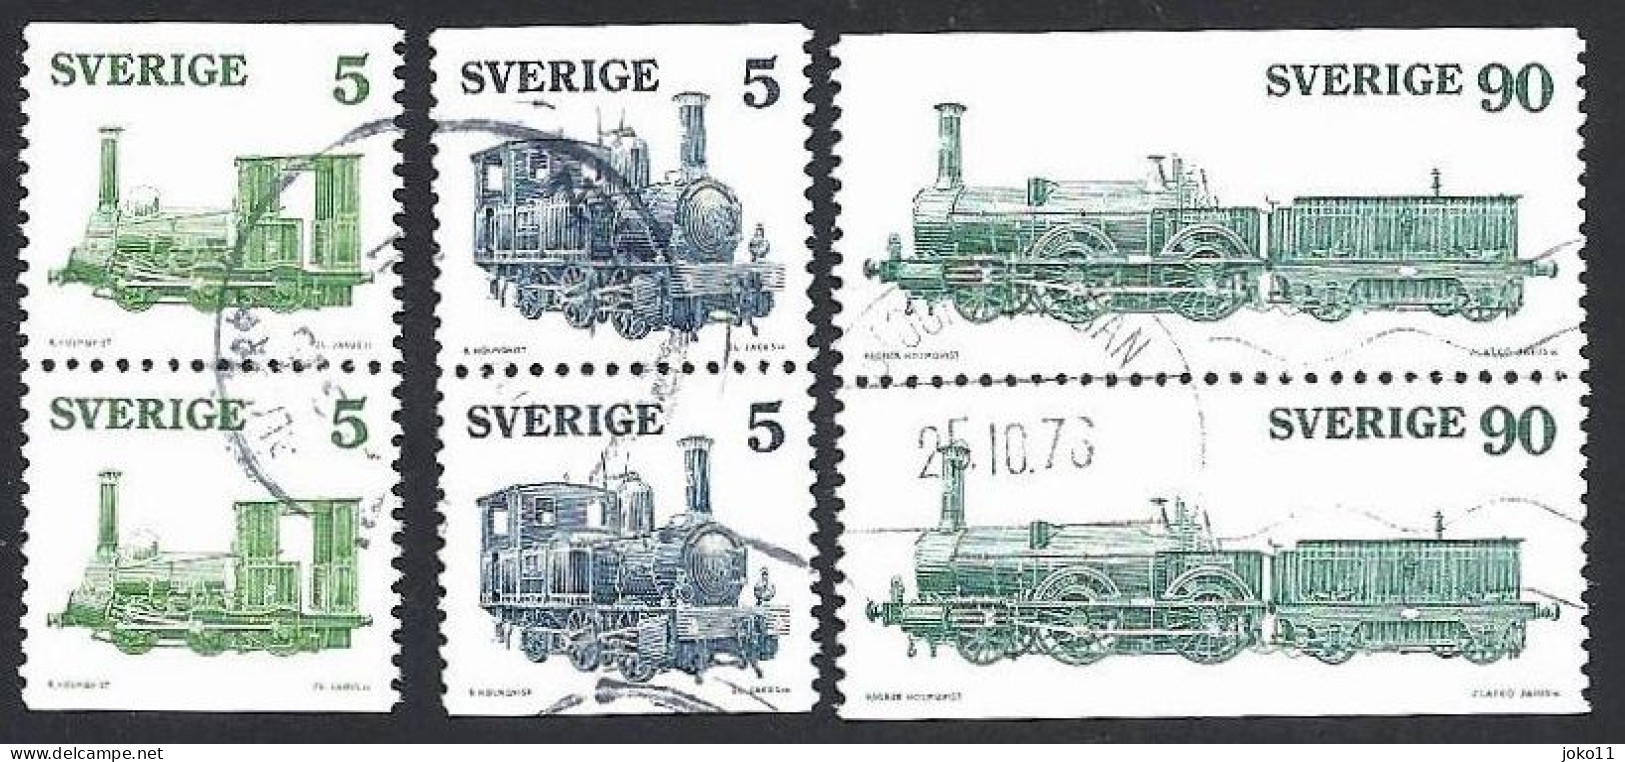 Schweden, 1975, Michel-Nr. 918-920 D/D, Gestempelt - Used Stamps